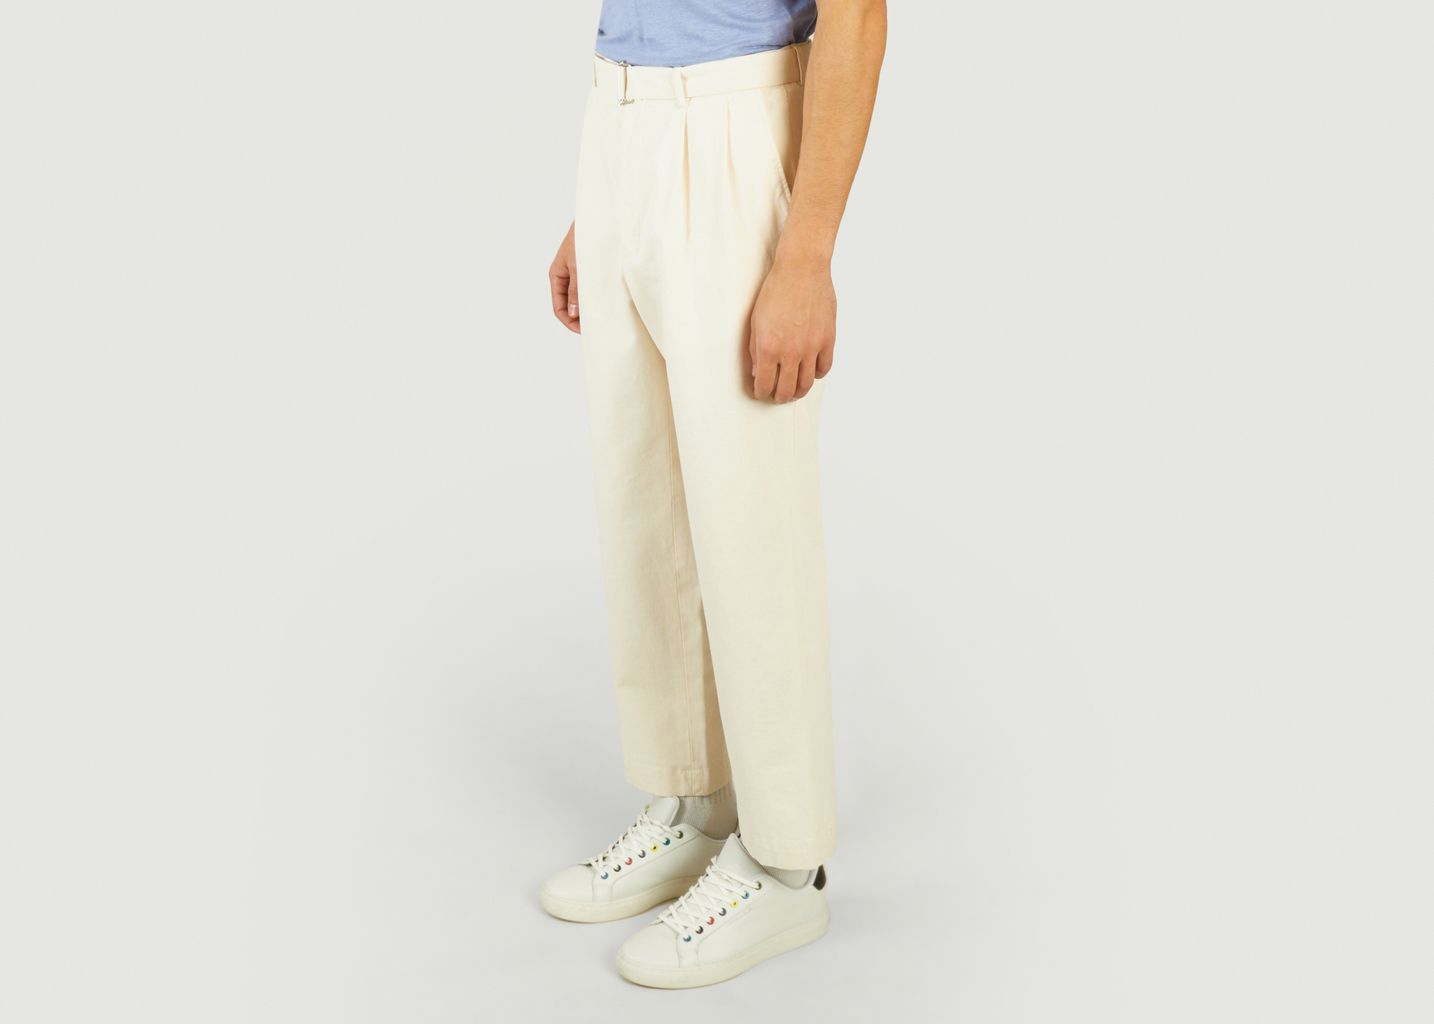 Luigi organic cotton twill chino pants - Officine Générale